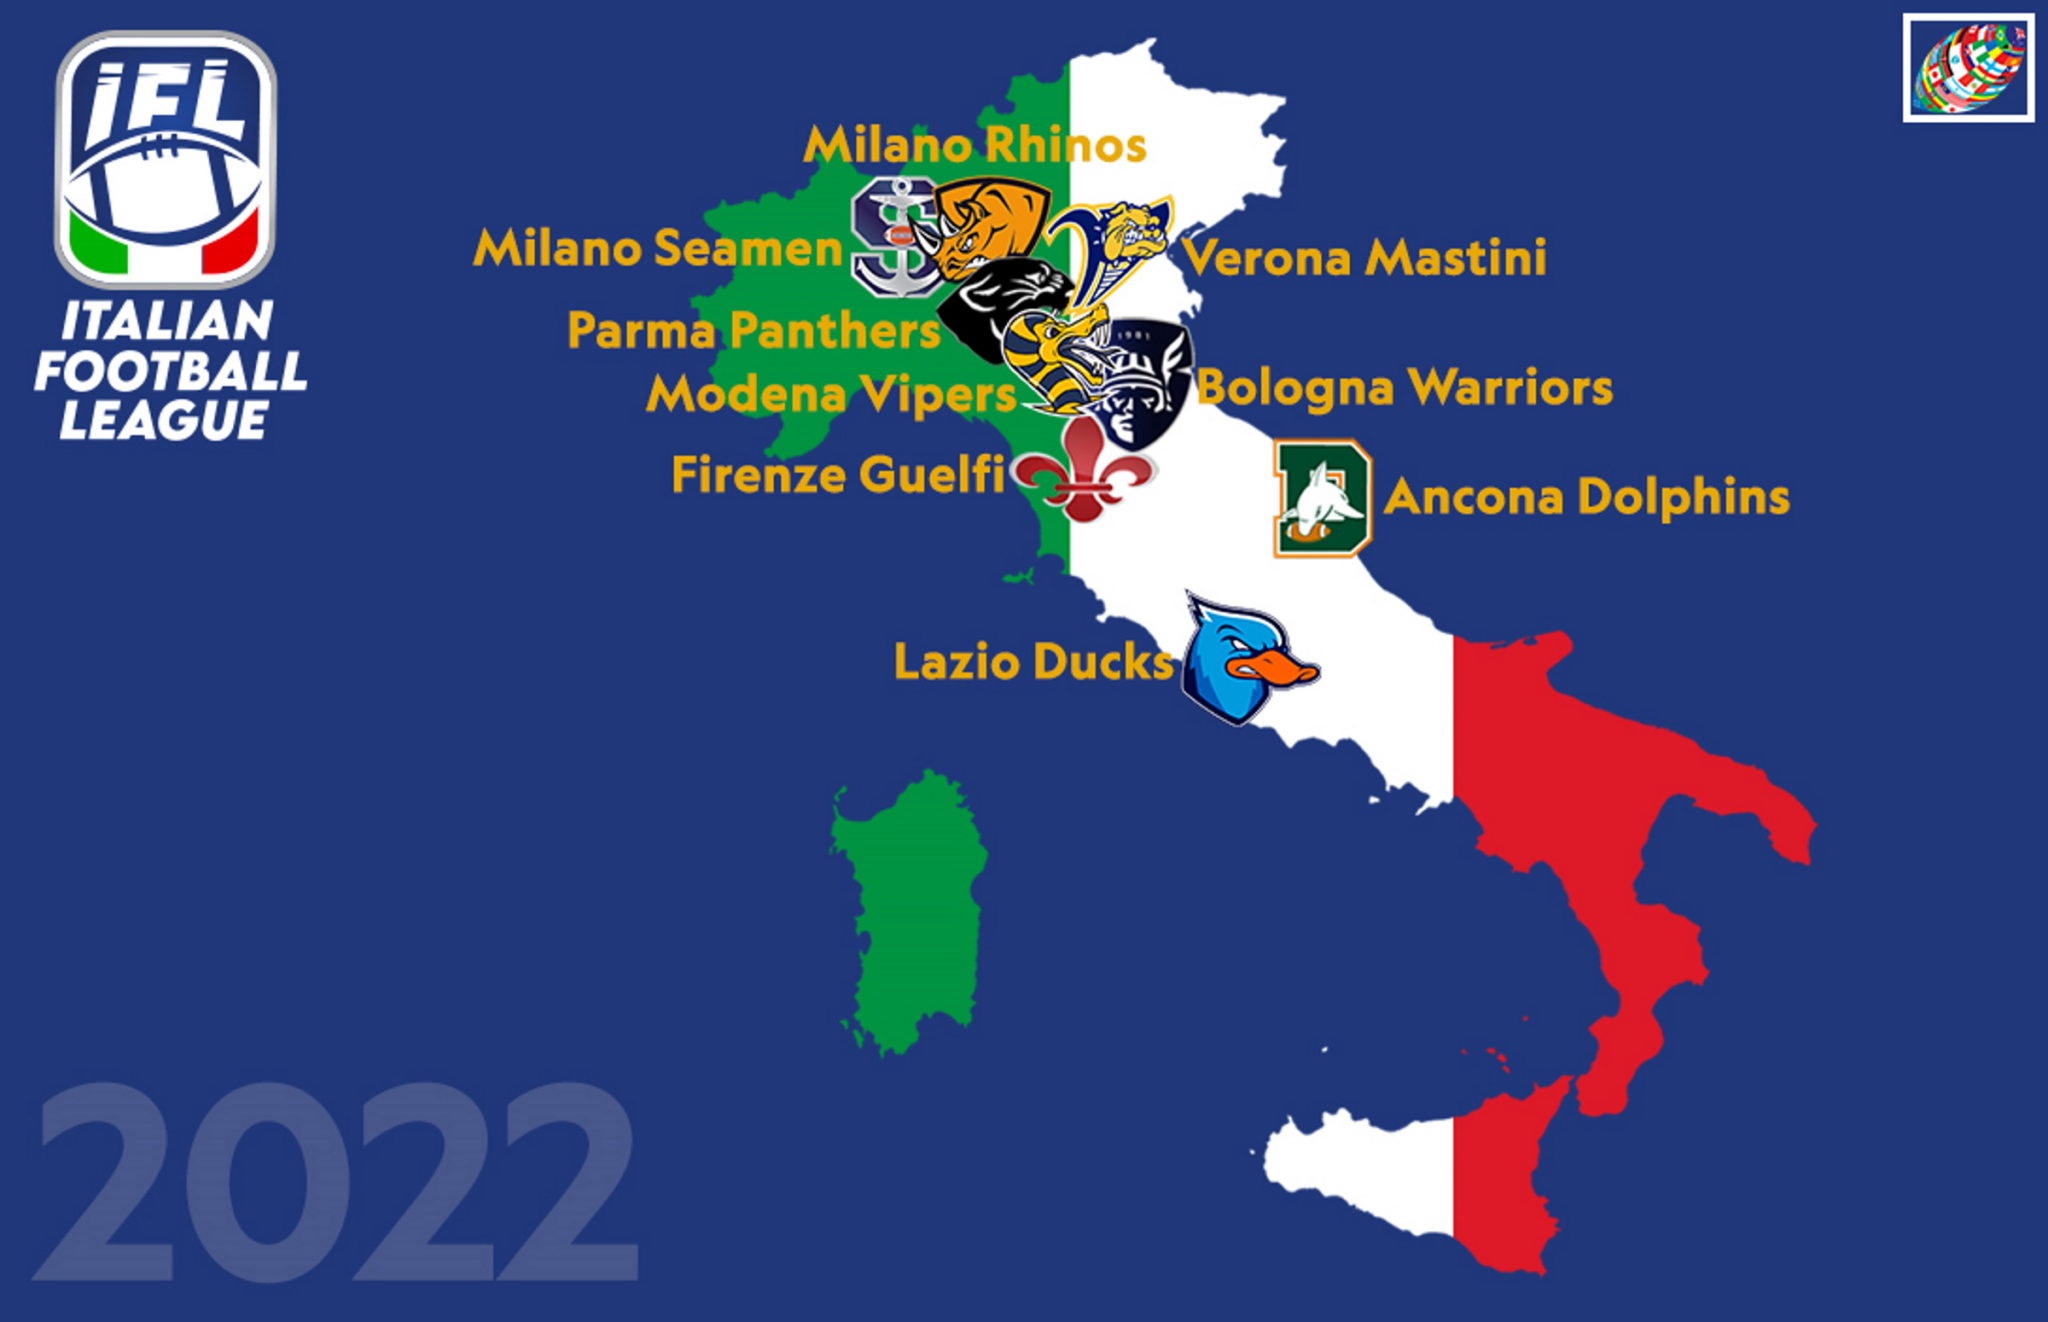 Italian Football League set to launch 2022 season